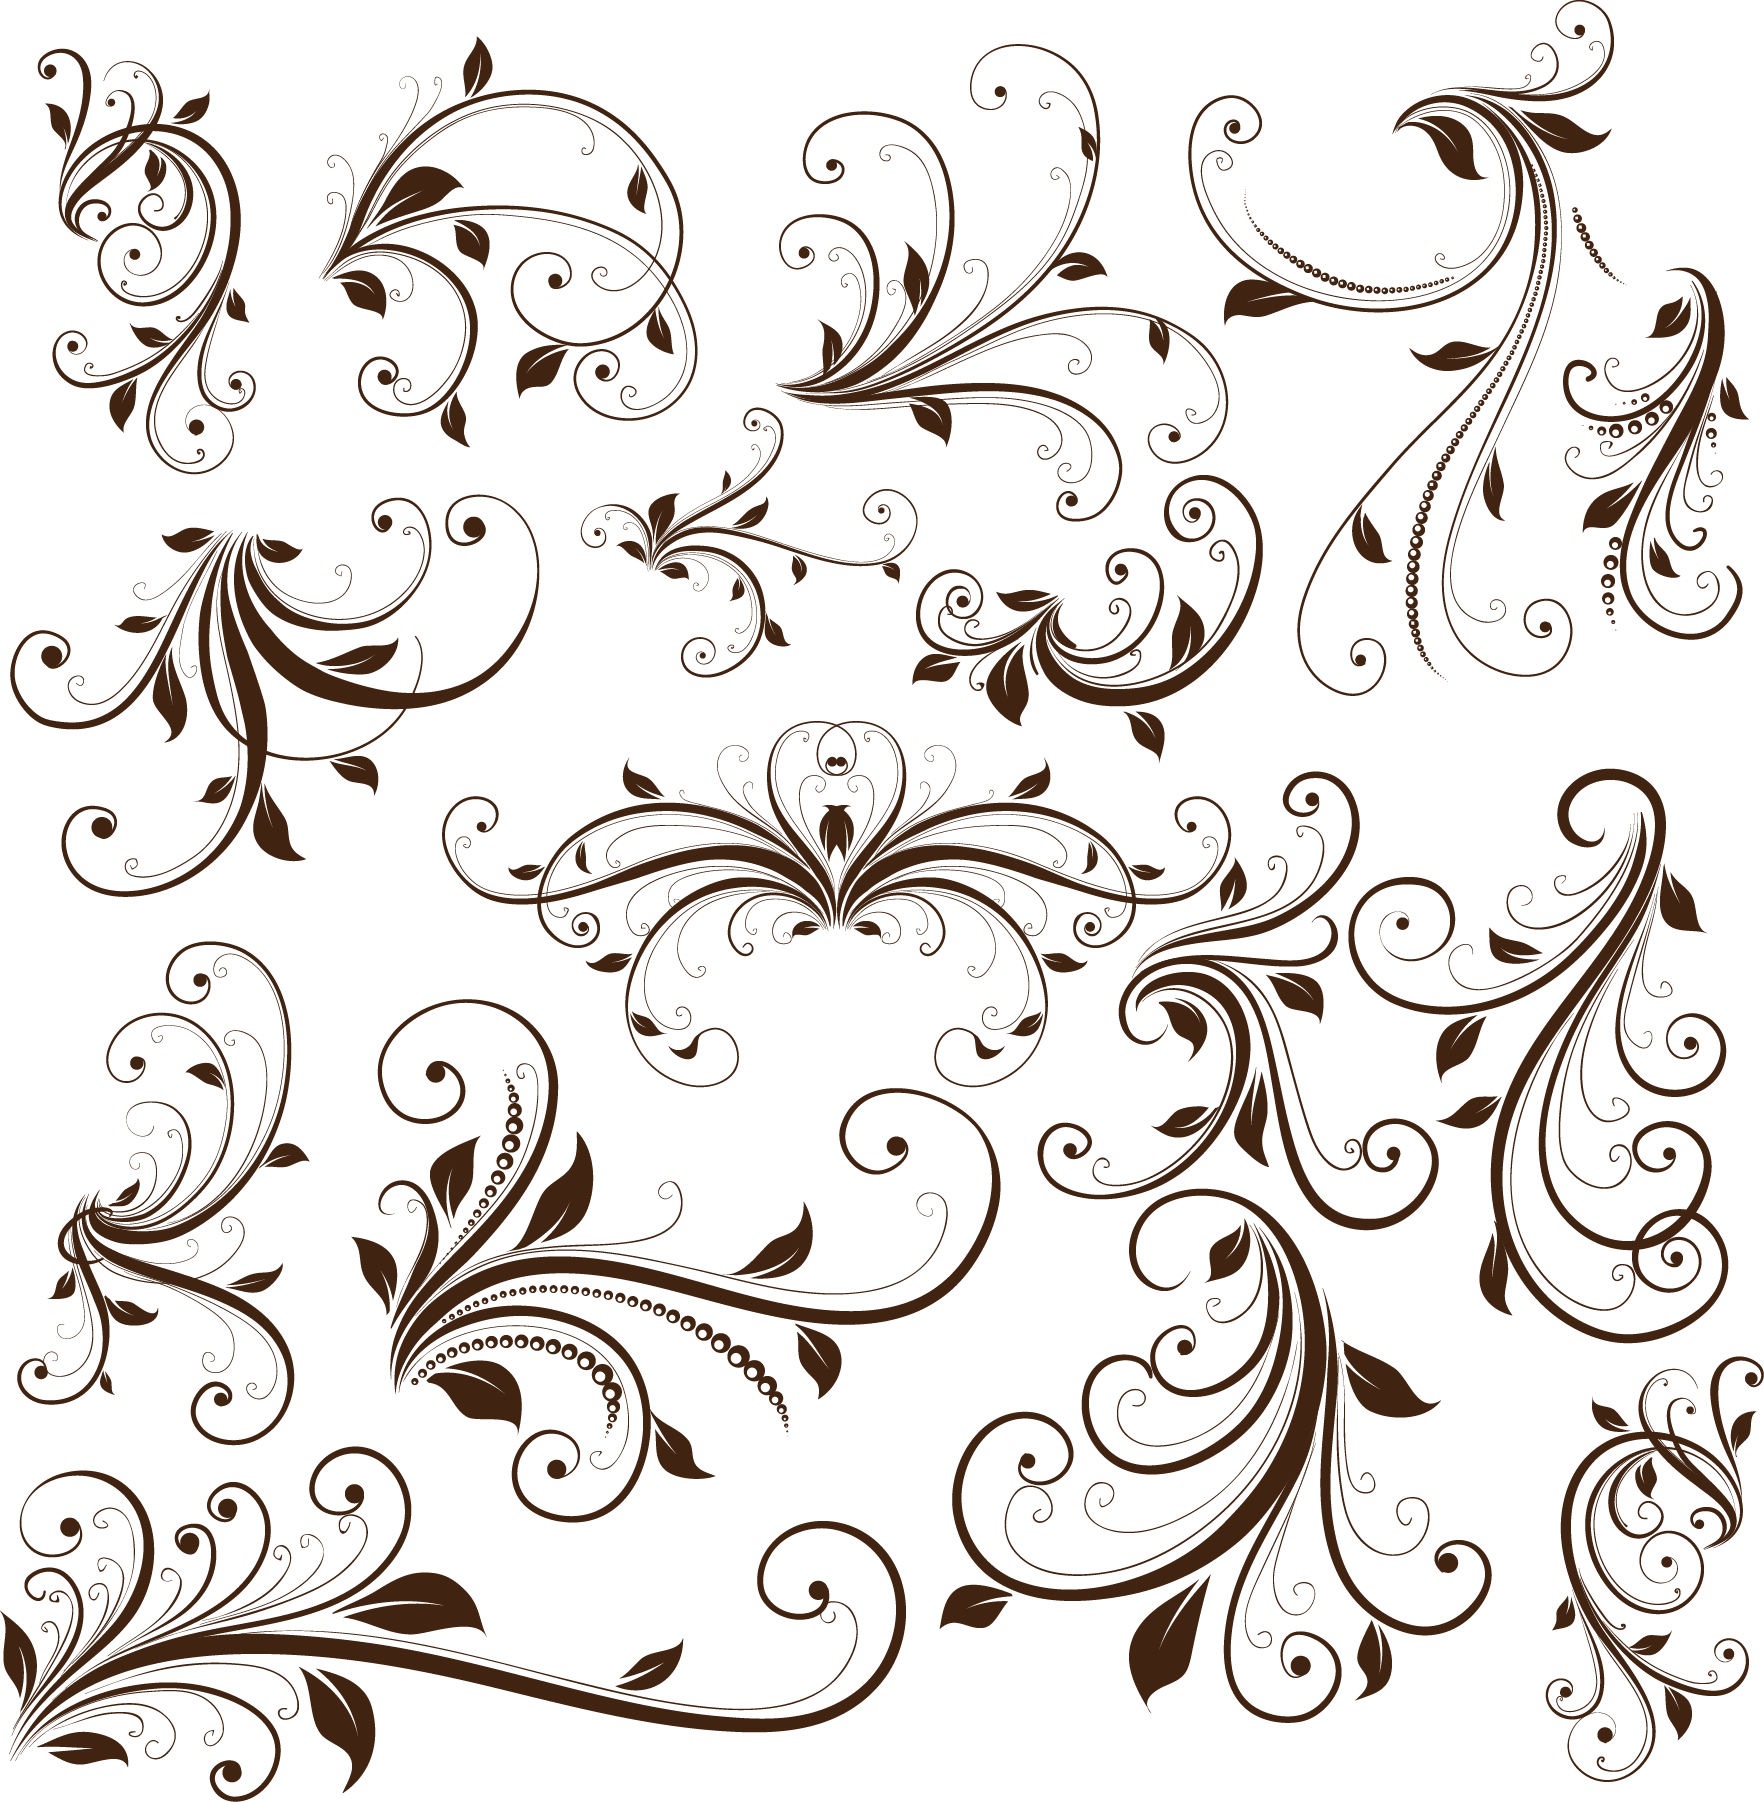 Swirl Floral Decorative Element Vector Graphic